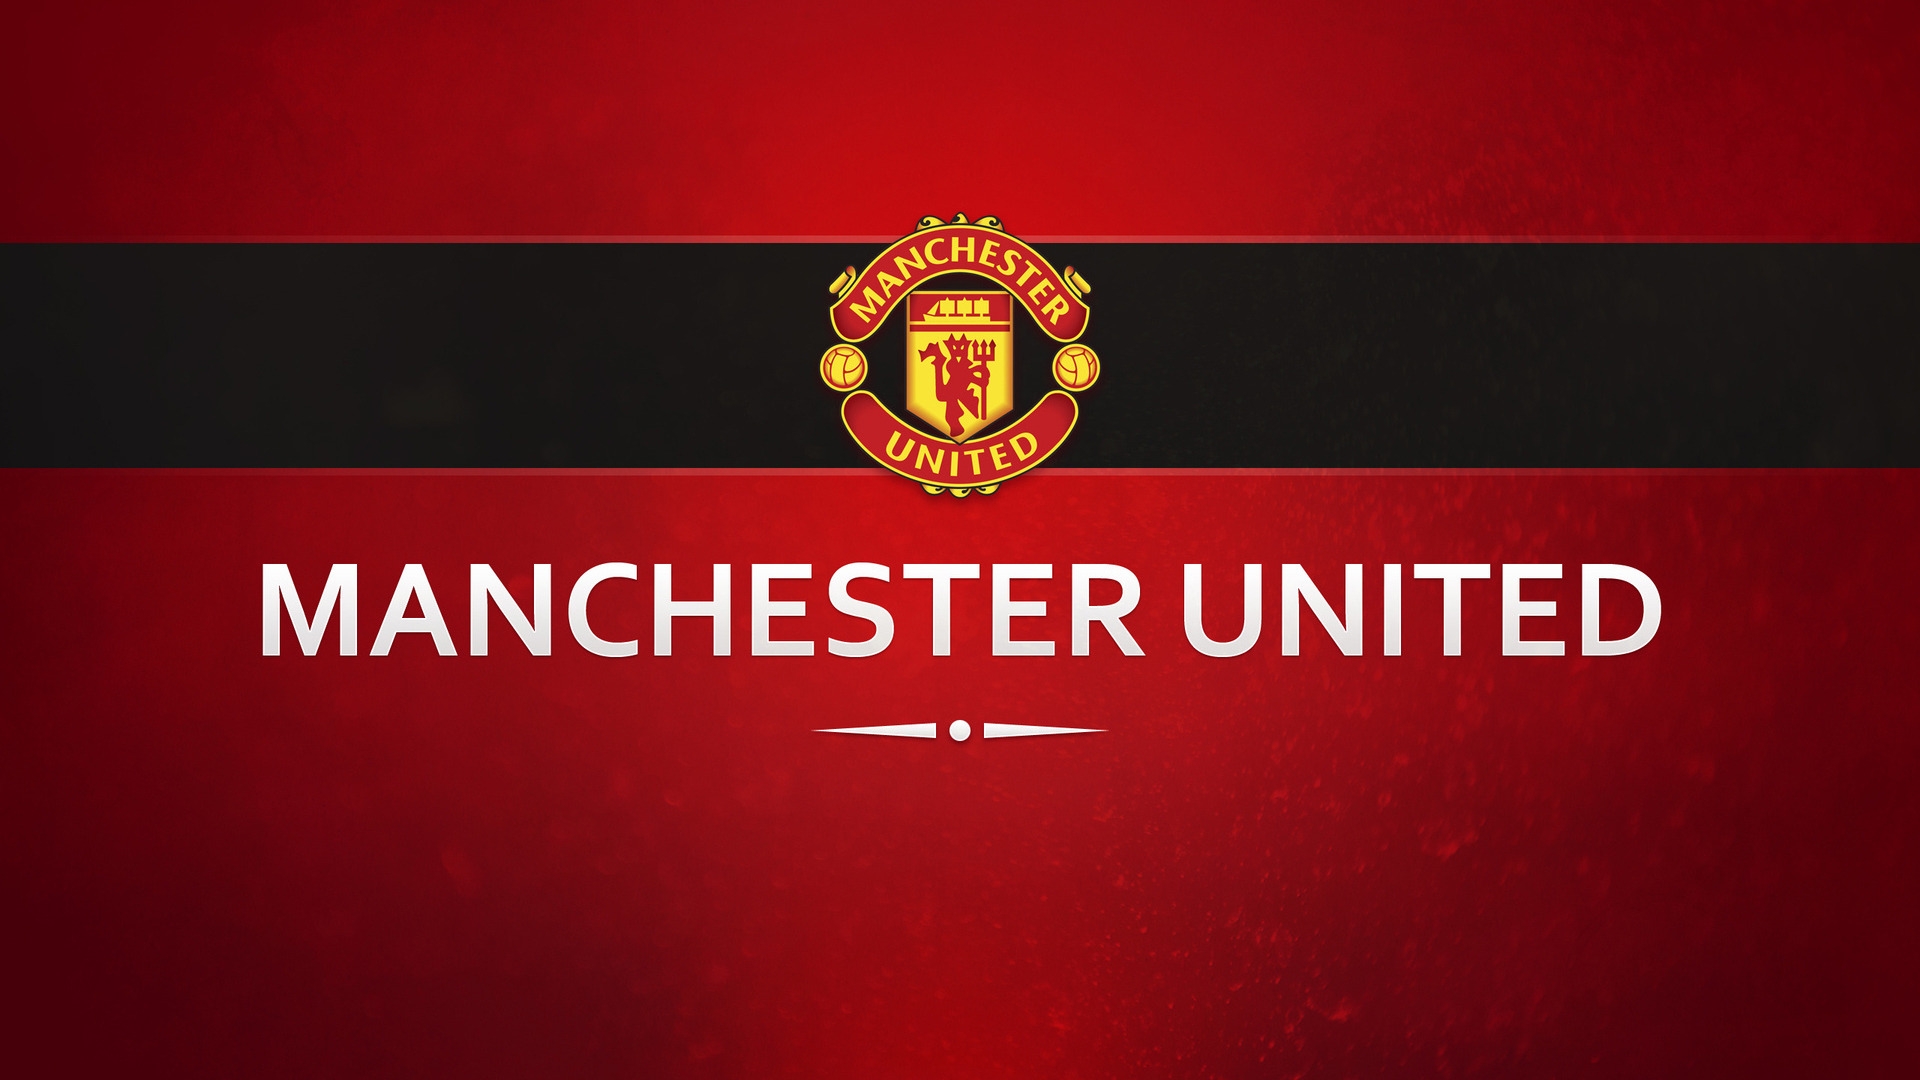 Manchester United Logo for 1920 x 1080 HDTV 1080p resolution